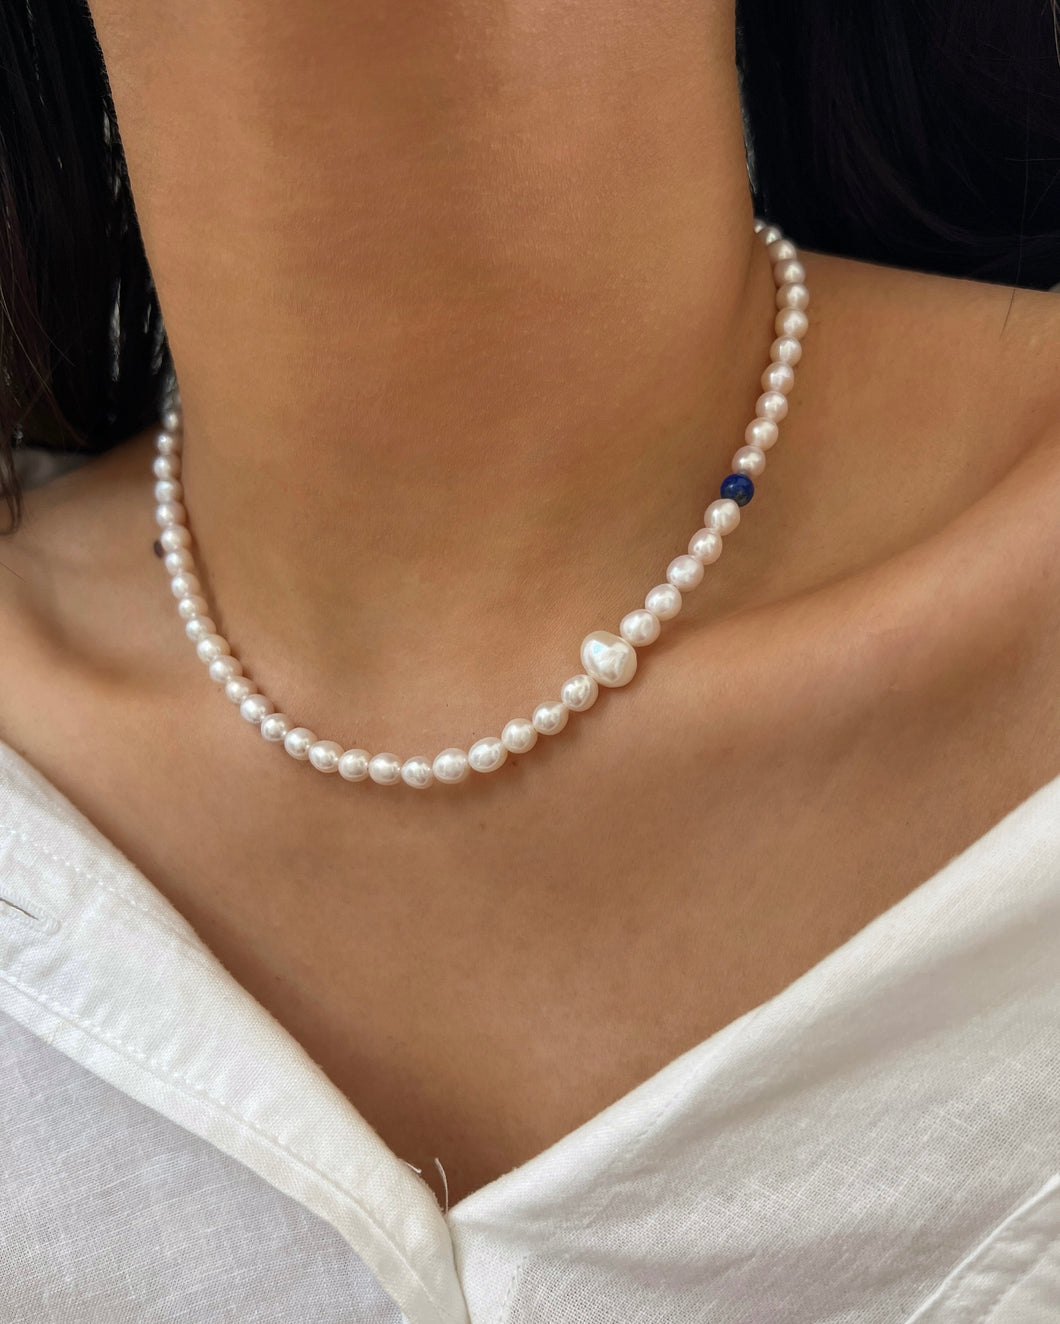 Cheryl Lapis lazuli Choker Necklace Adjustable